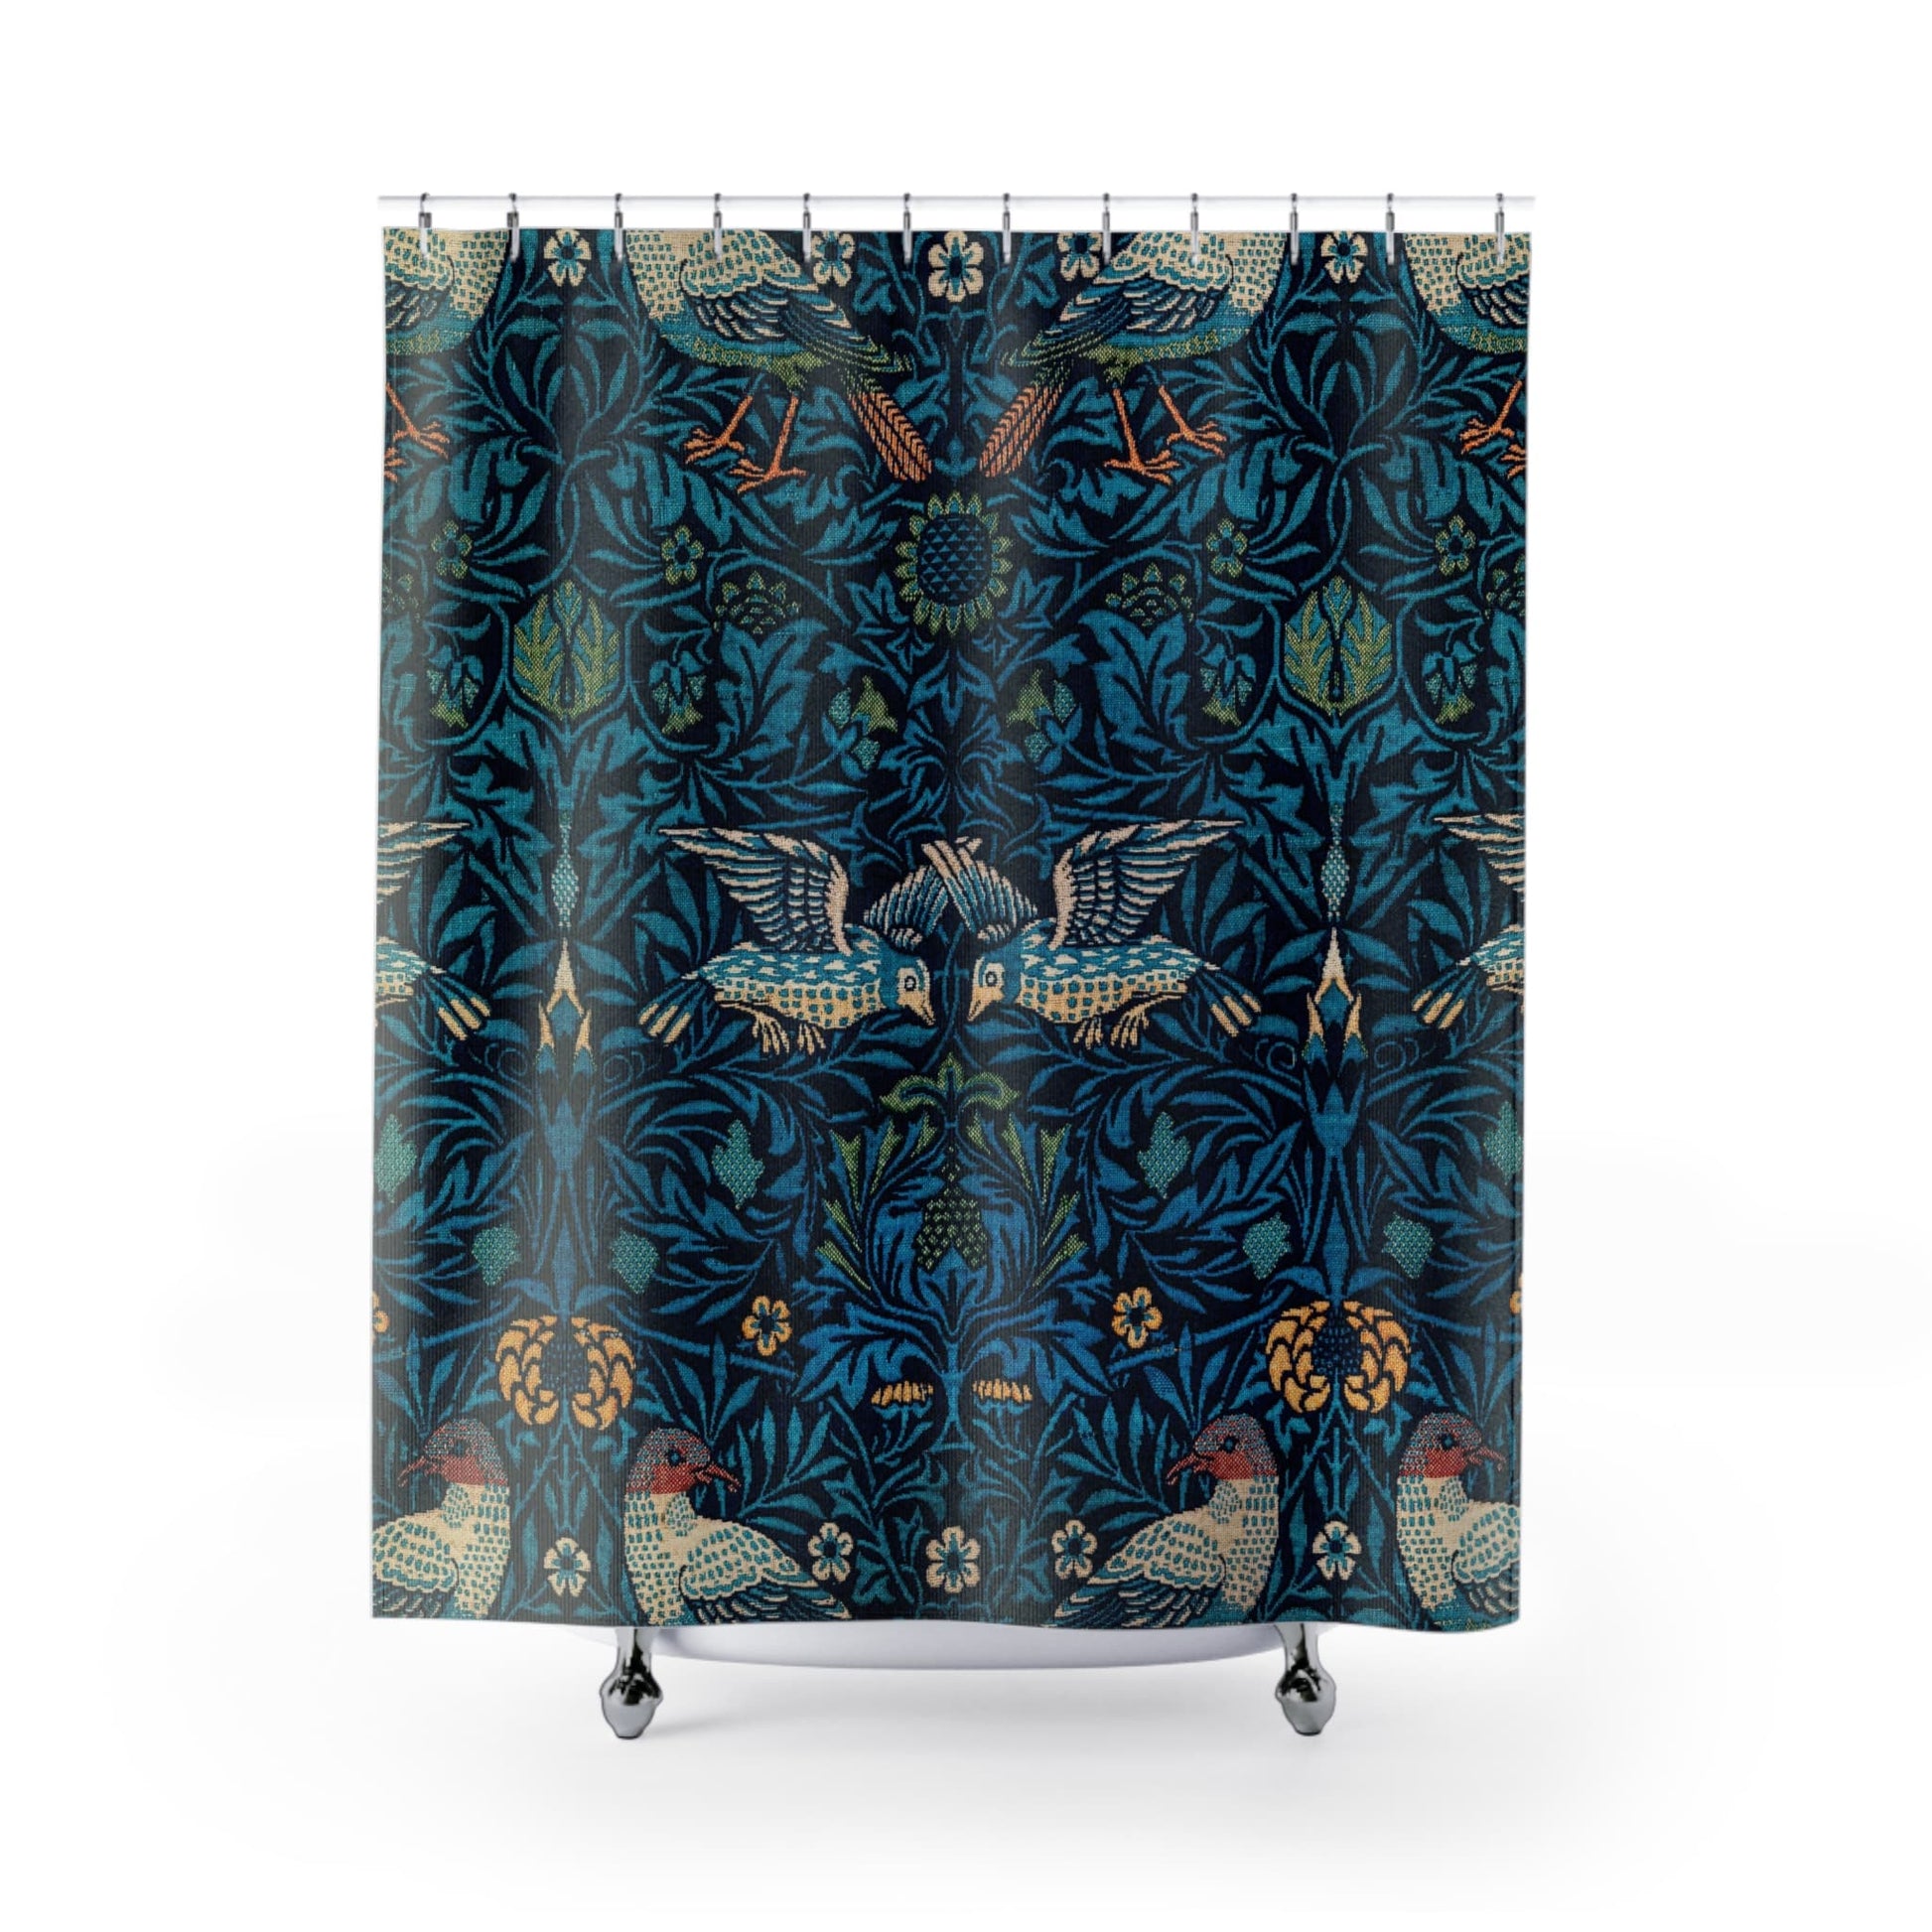 Blue Nature Pattern Shower Curtain with William Morris design, classic bathroom decor showcasing Morris's iconic patterns.